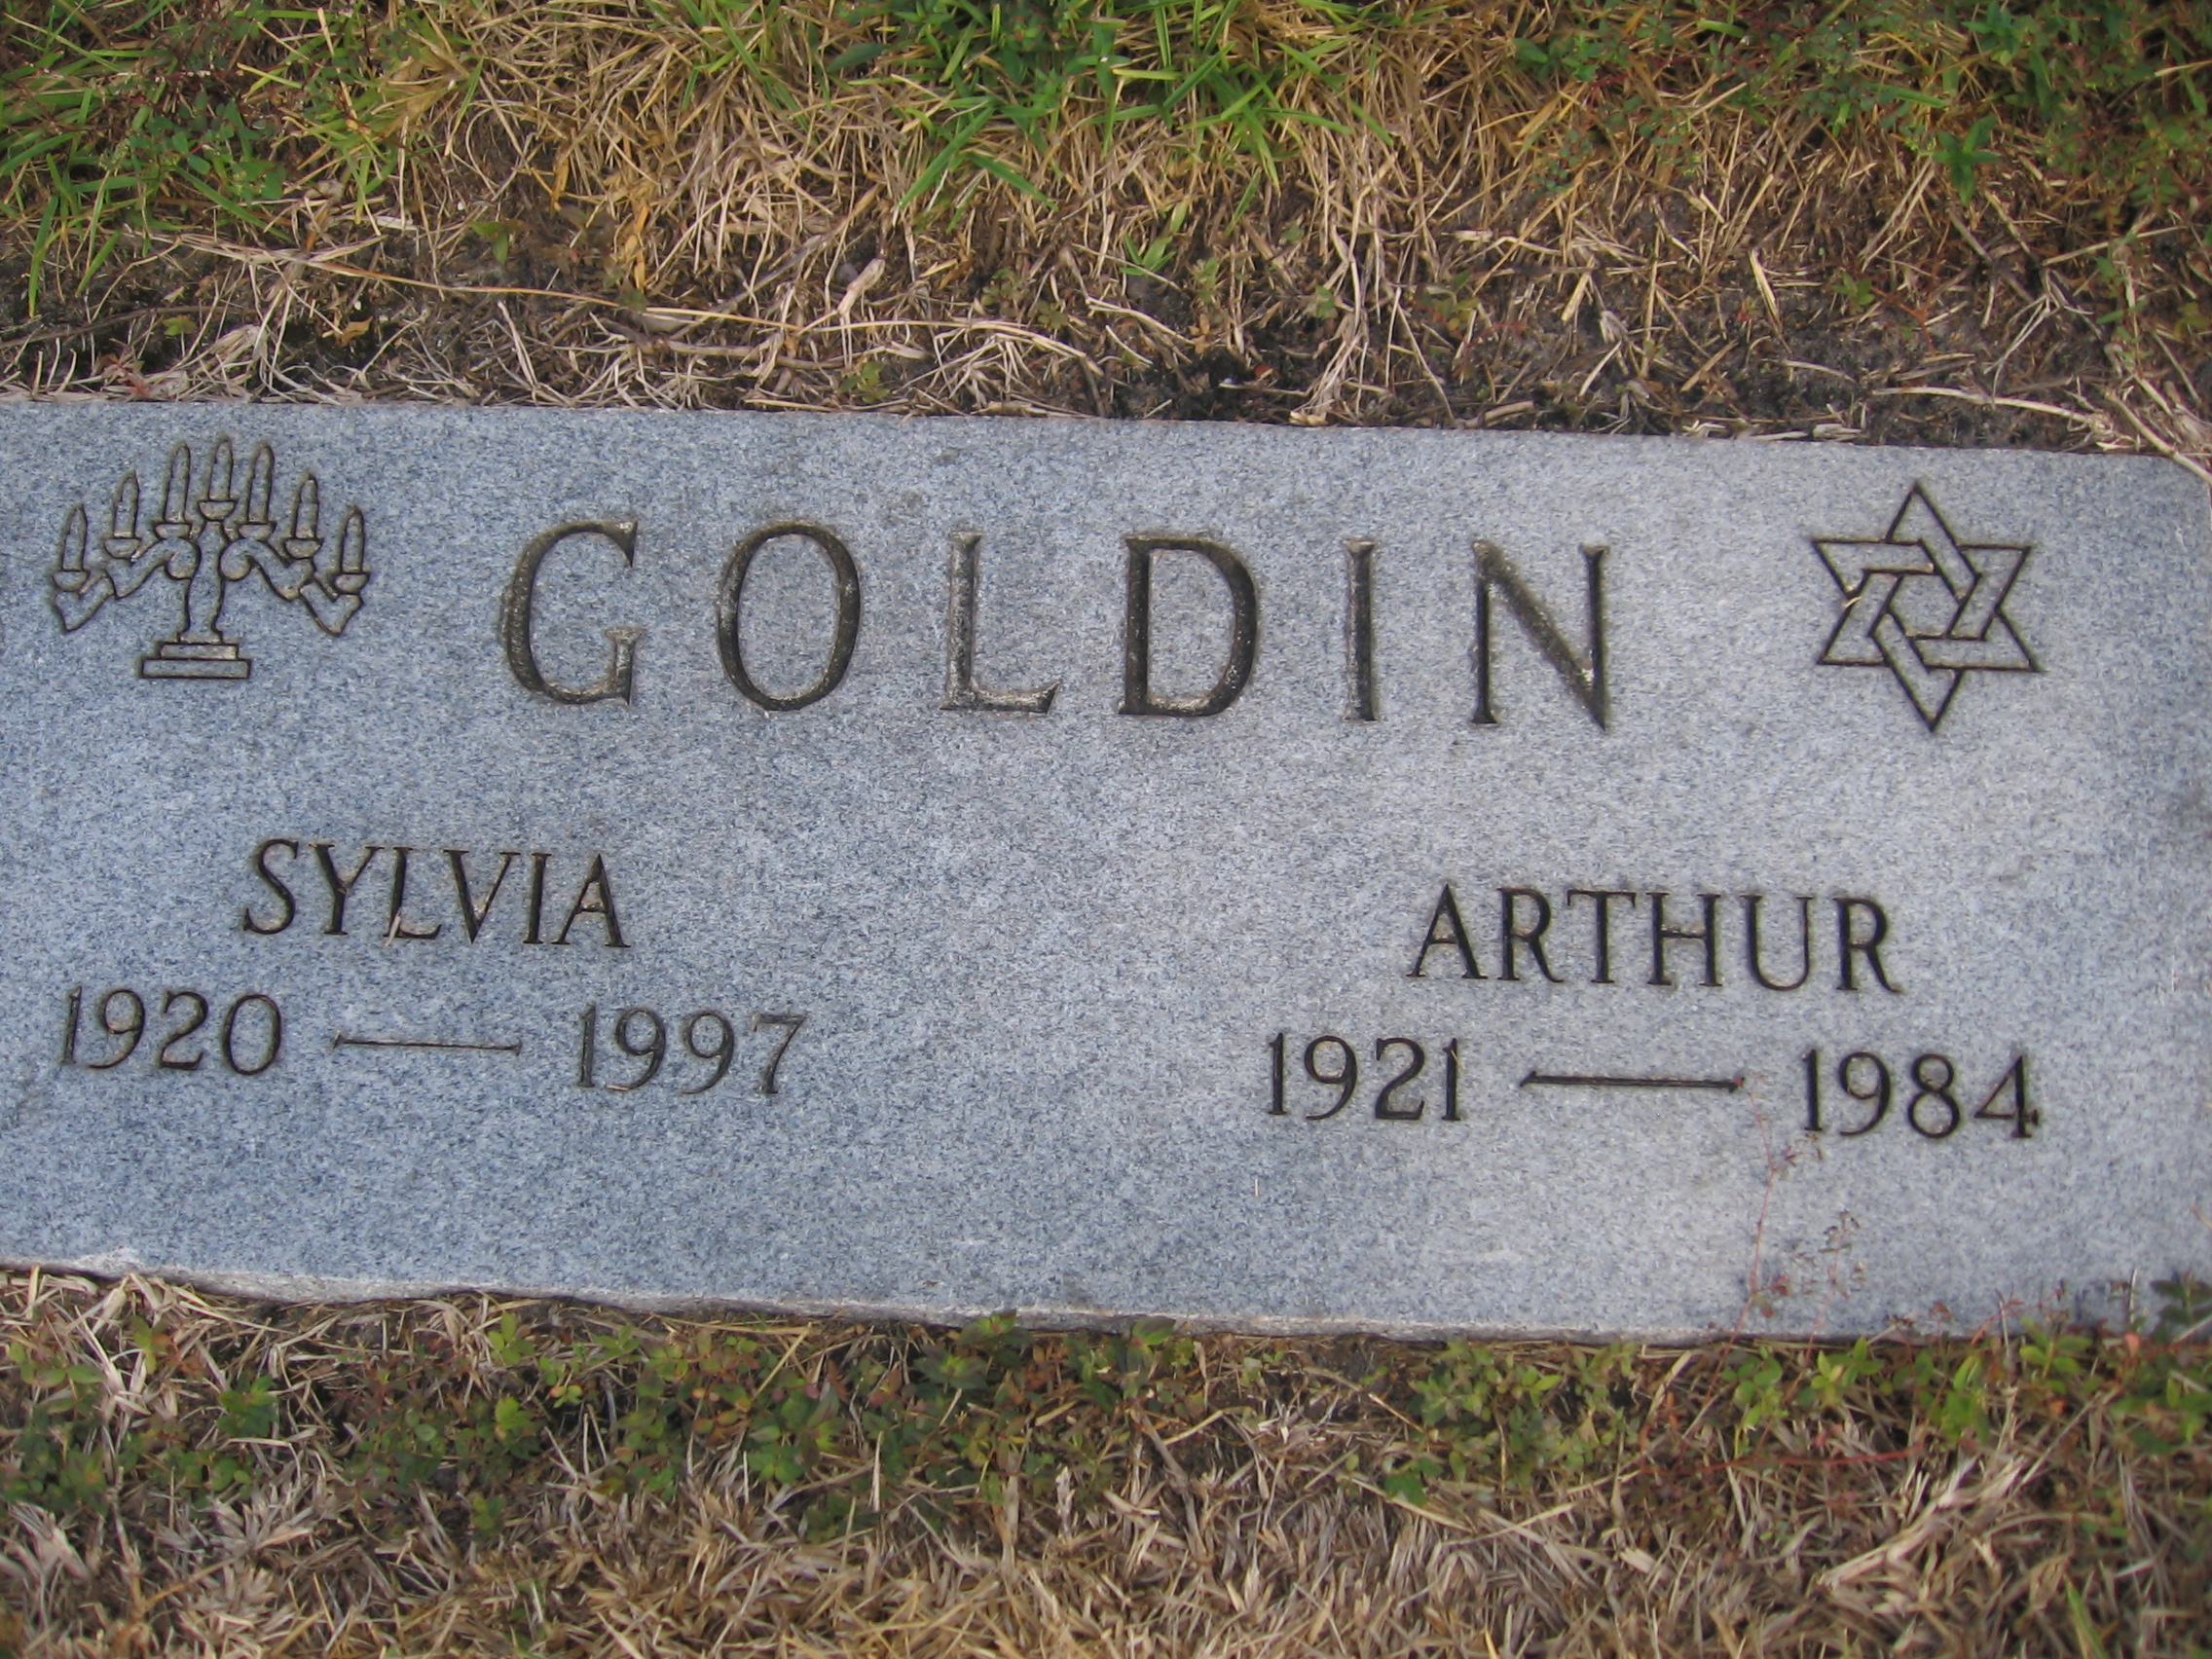 Arthur Goldin